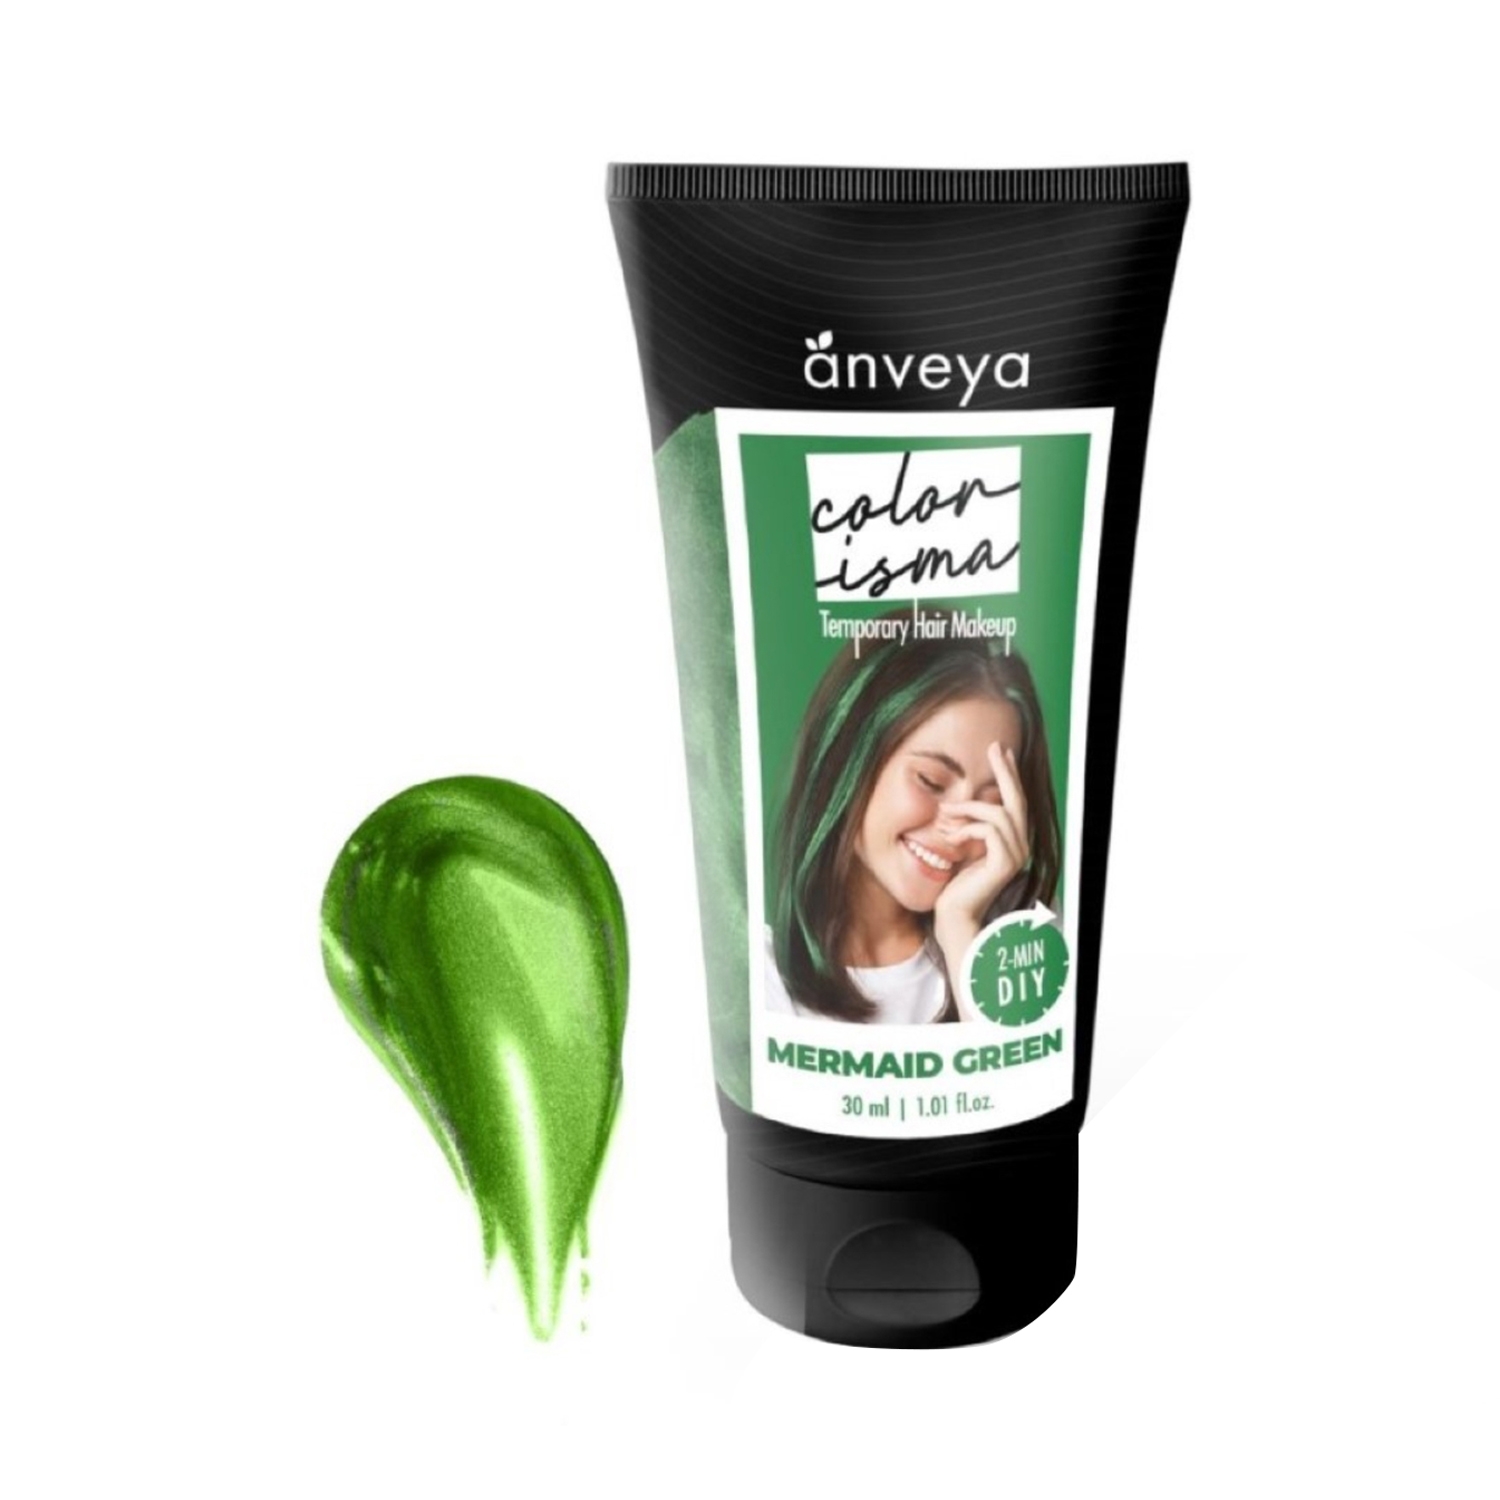 Anveya Colorisma Hair Color Makeup - Mermaid Green (30ml)